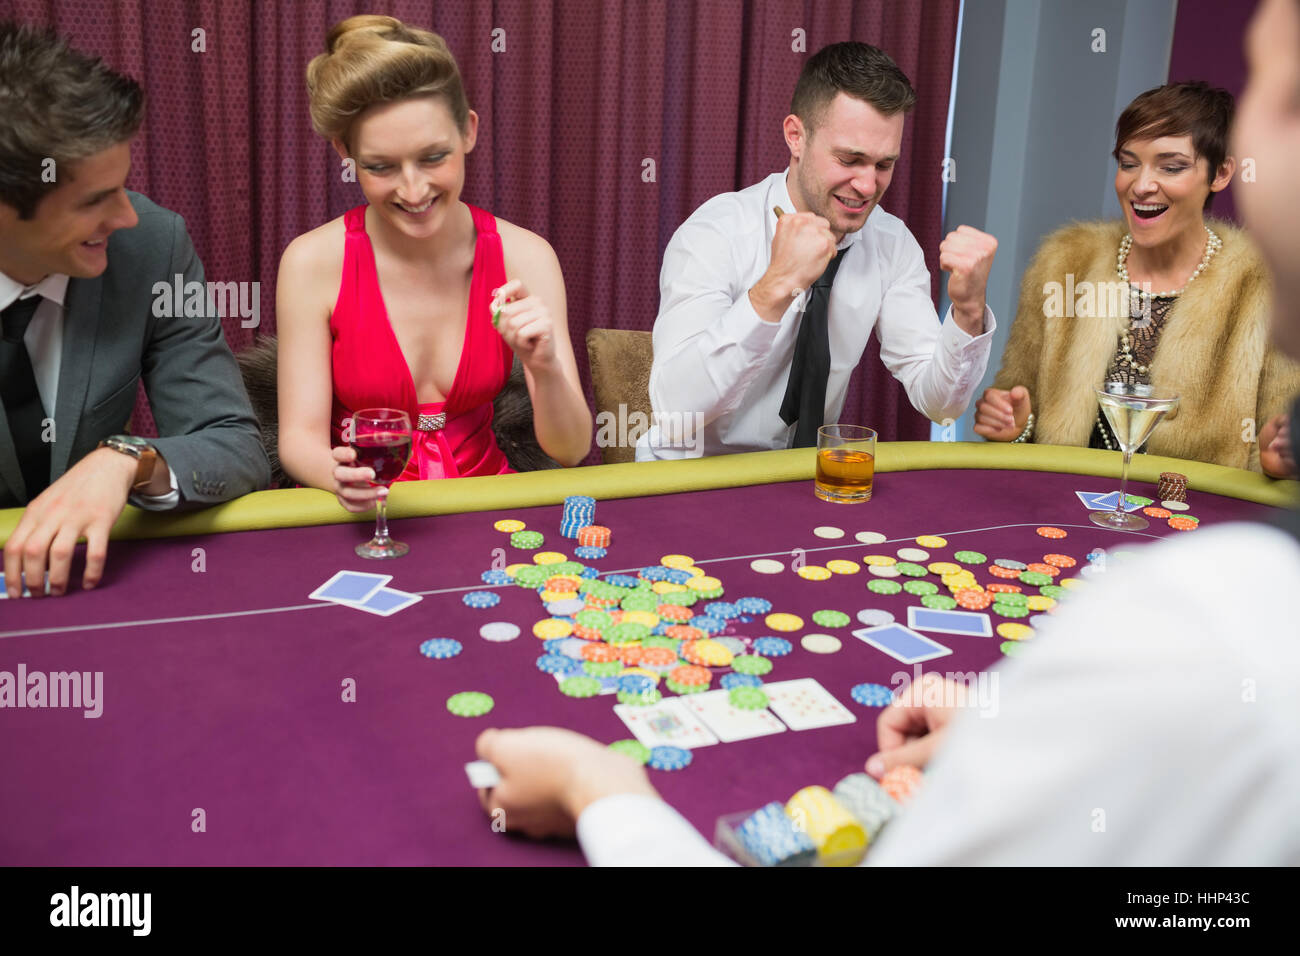 People winning in poker game in casino Stock Photo